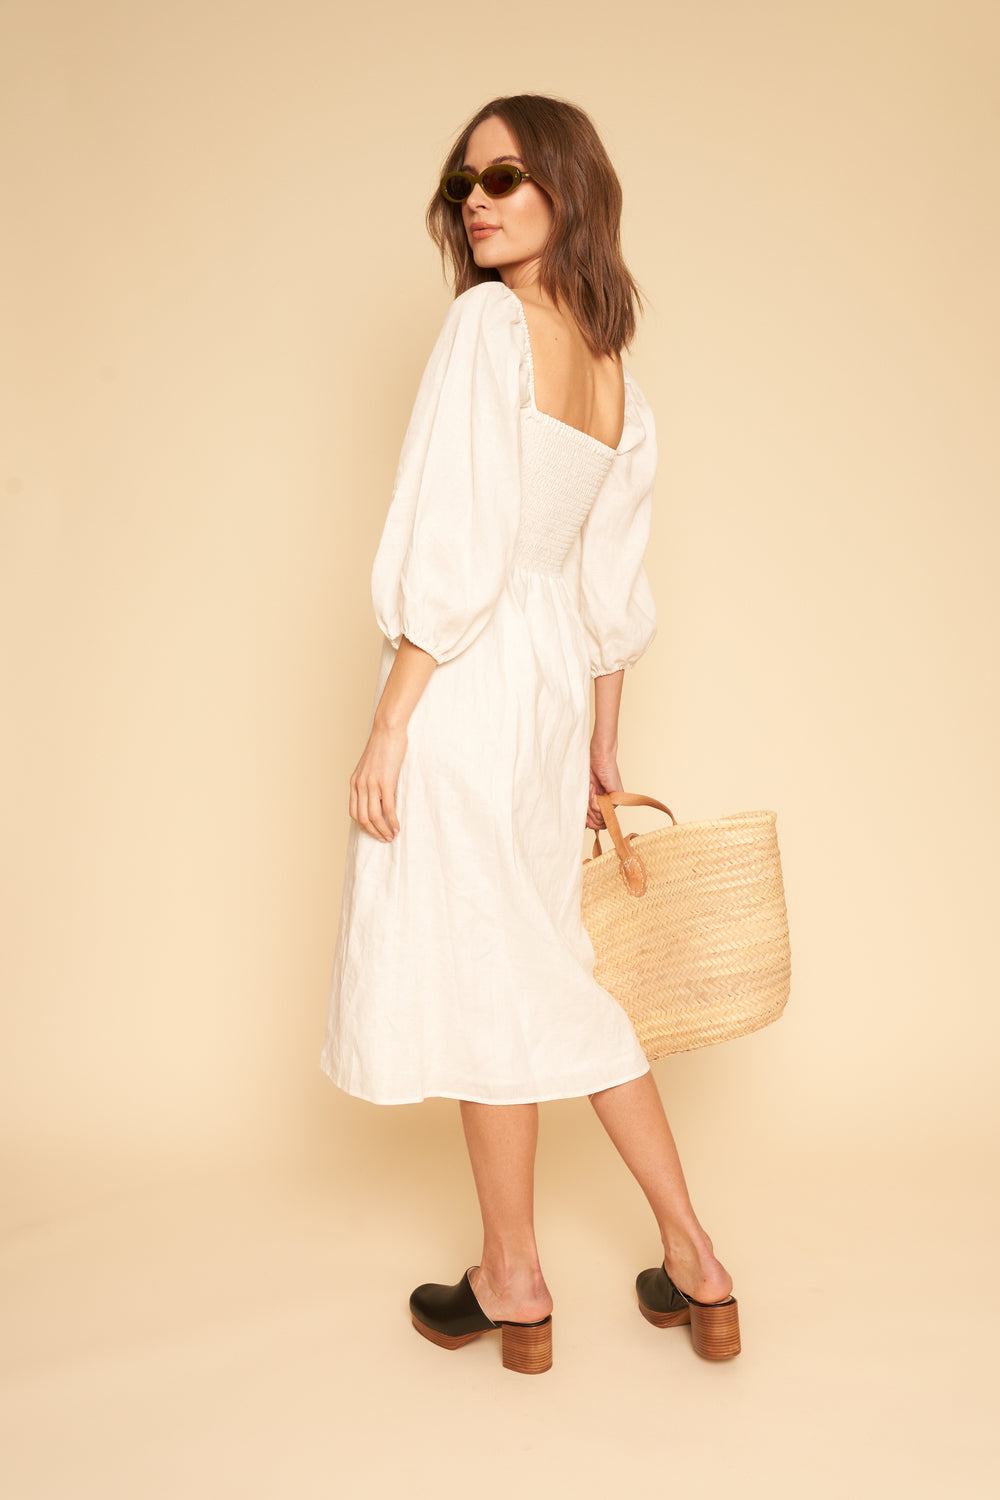 Sidney Dress in Coconut Linen - Whimsy & Row